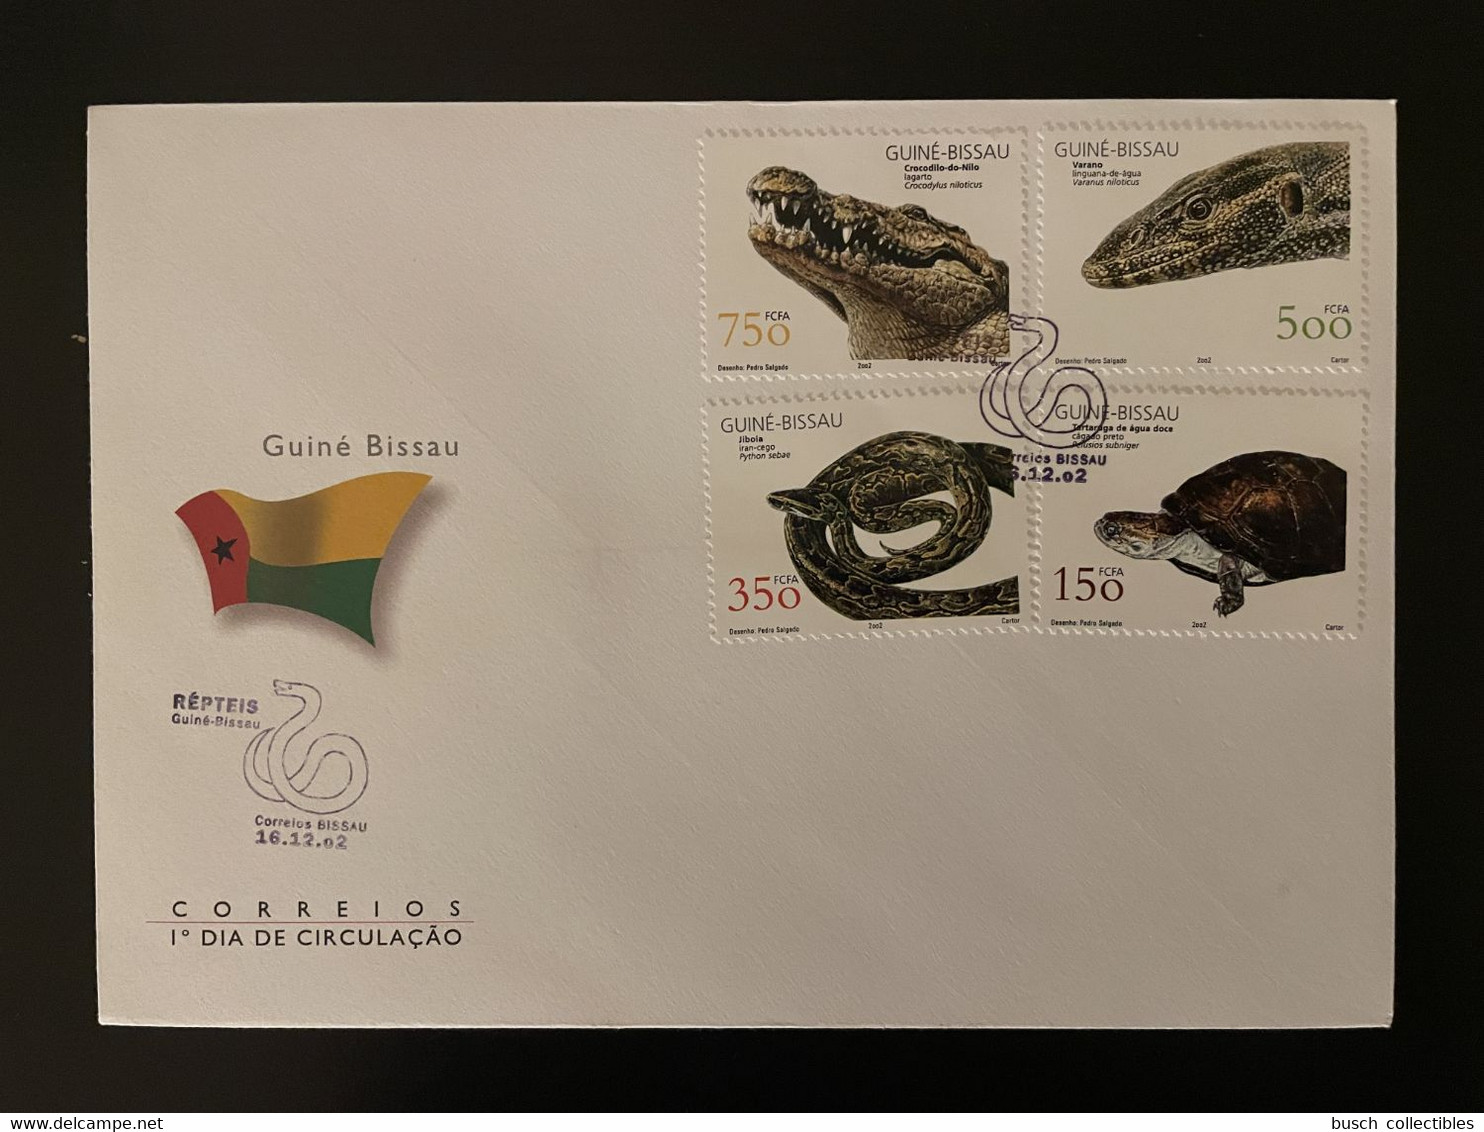 Guiné-Bissau Guinea Guinée Bissau 2002 Mi. 2029 - 2032 FDC Reptiles Reptilien Schildkröte Schlange Snake Serpent Tortue - Serpents